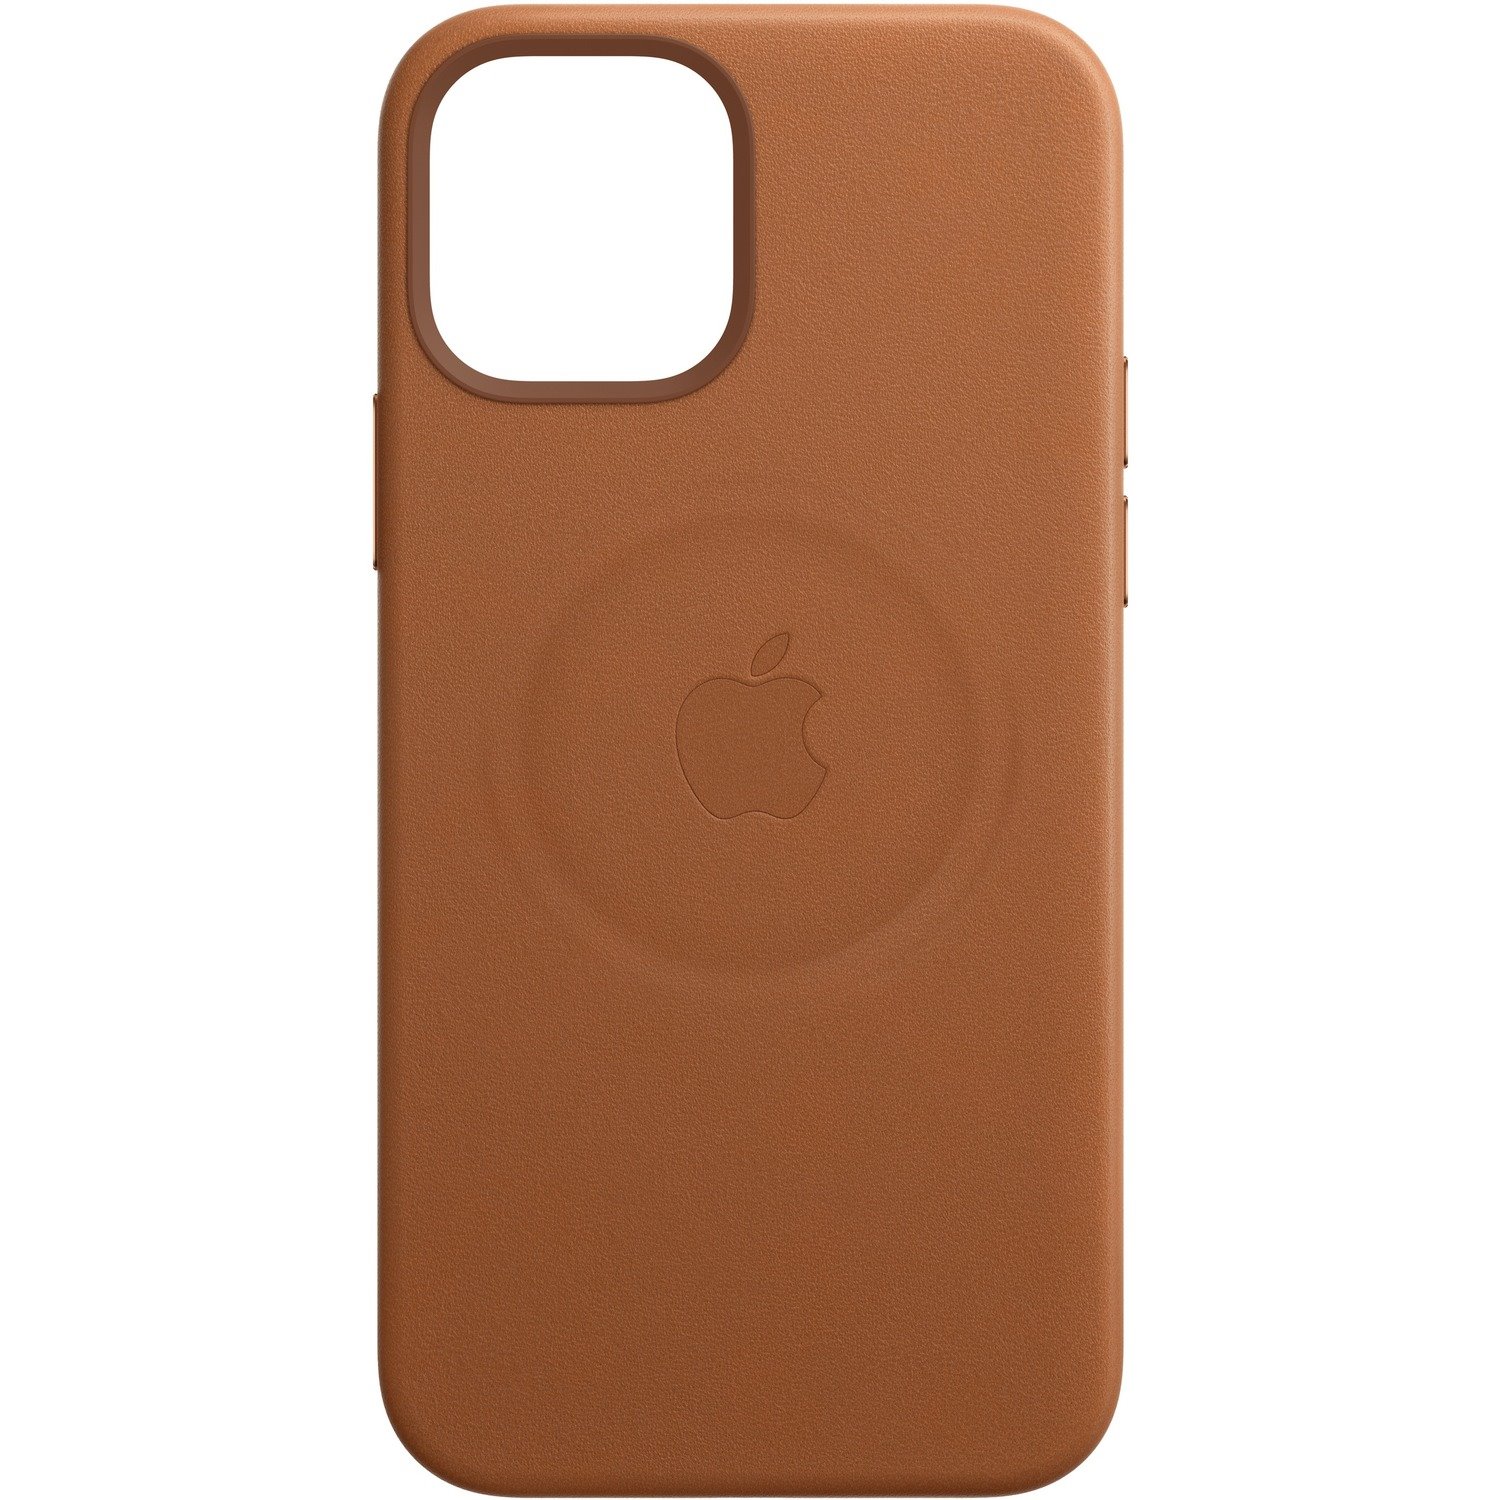 Apple Case for Apple iPhone 12 mini Smartphone - Saddle Brown